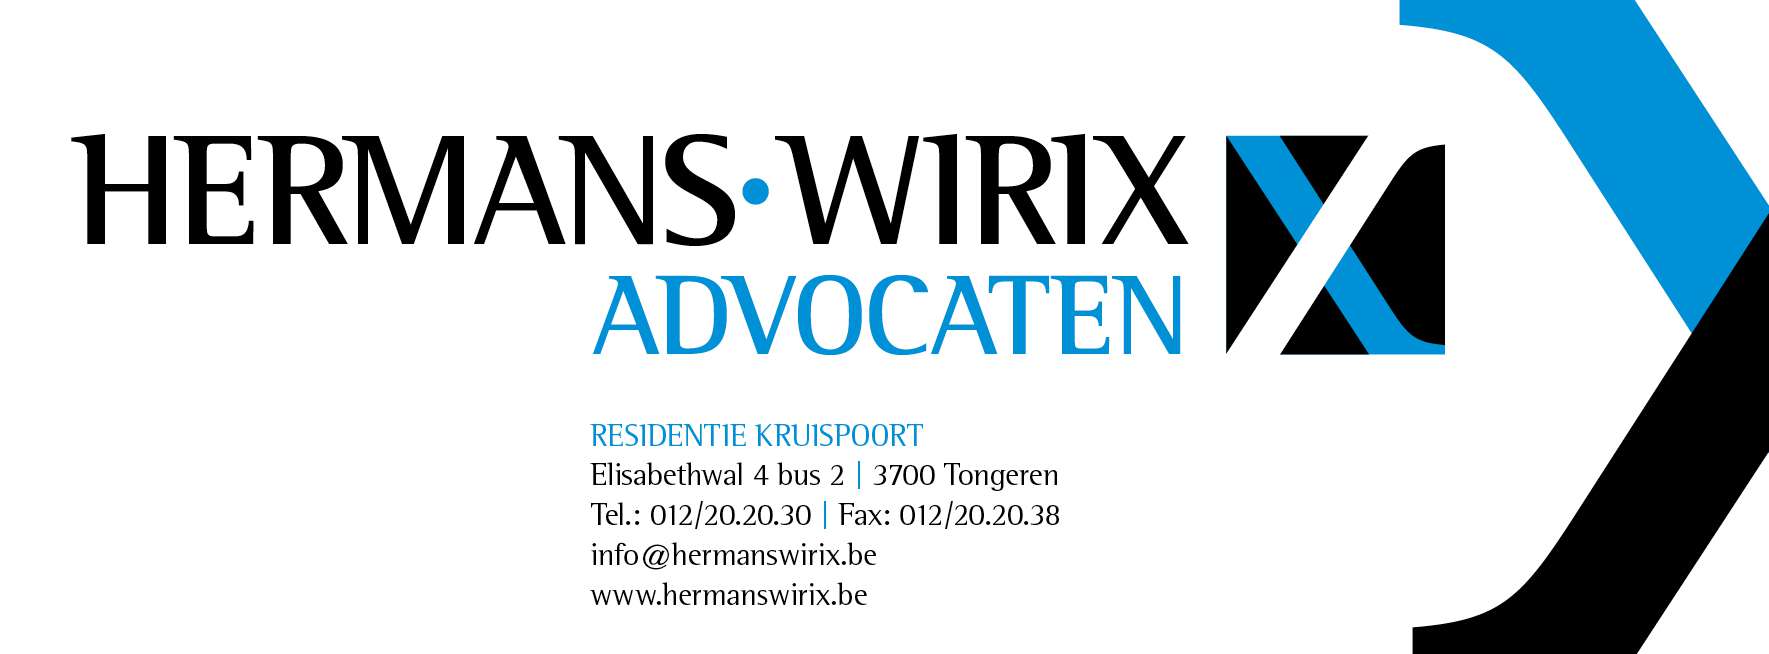 advocaten Diepenbeek Hermans-Wirix advocaten